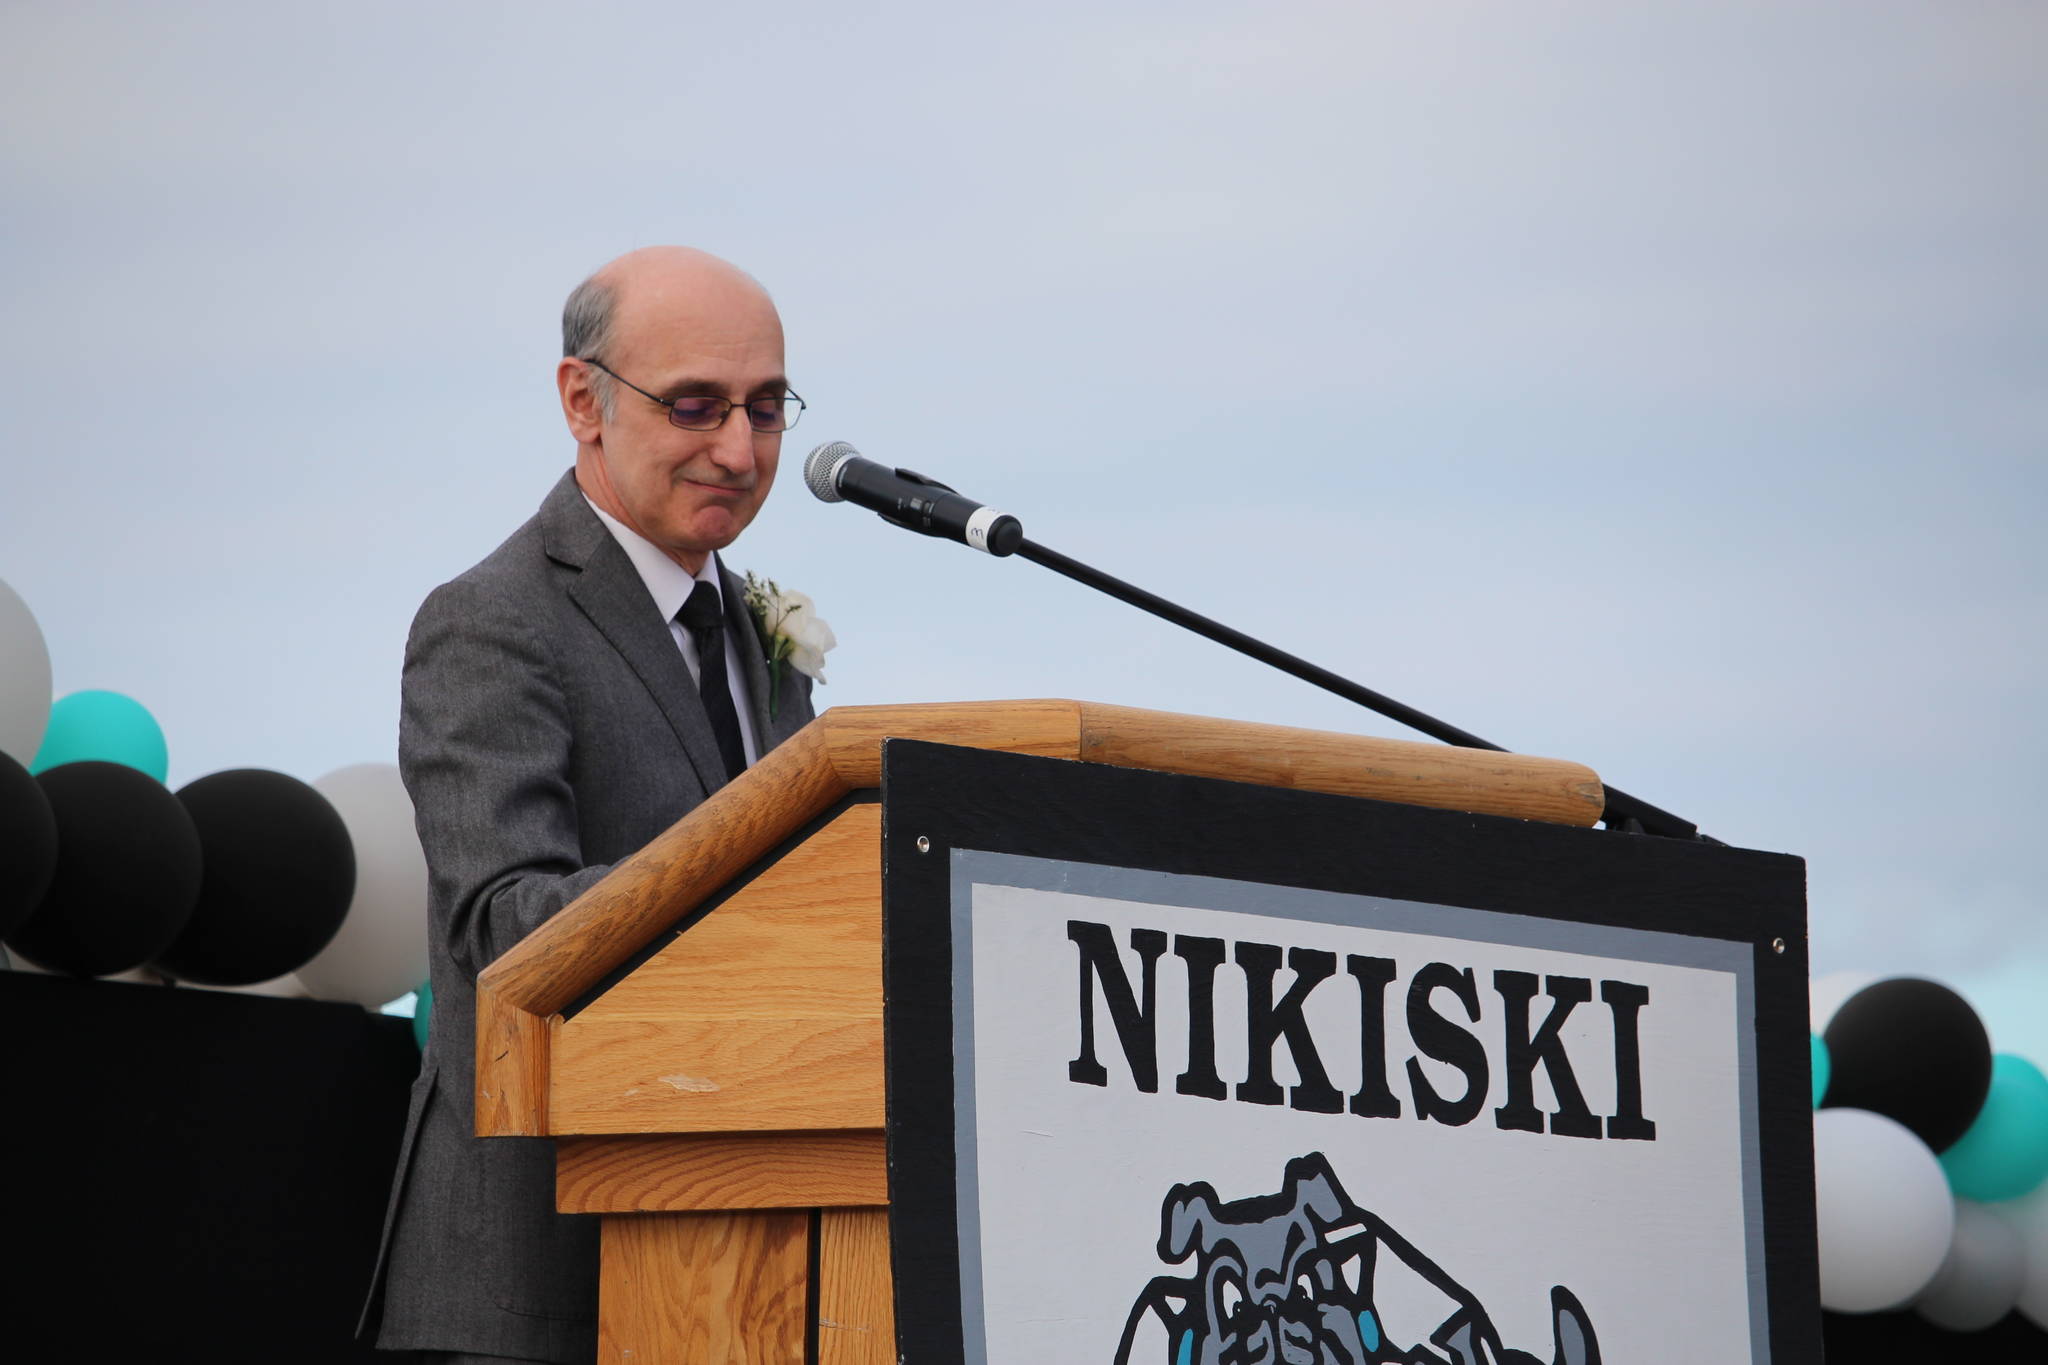 Retiring teacher Joe Rizzo gives the commencement speech during the 2020 Nikiski High School Graduation Commencement Ceremony in Nikiski, Alaska on May 19, 2020. (Photo by Brian Mazurek/Peninsula Clarion)